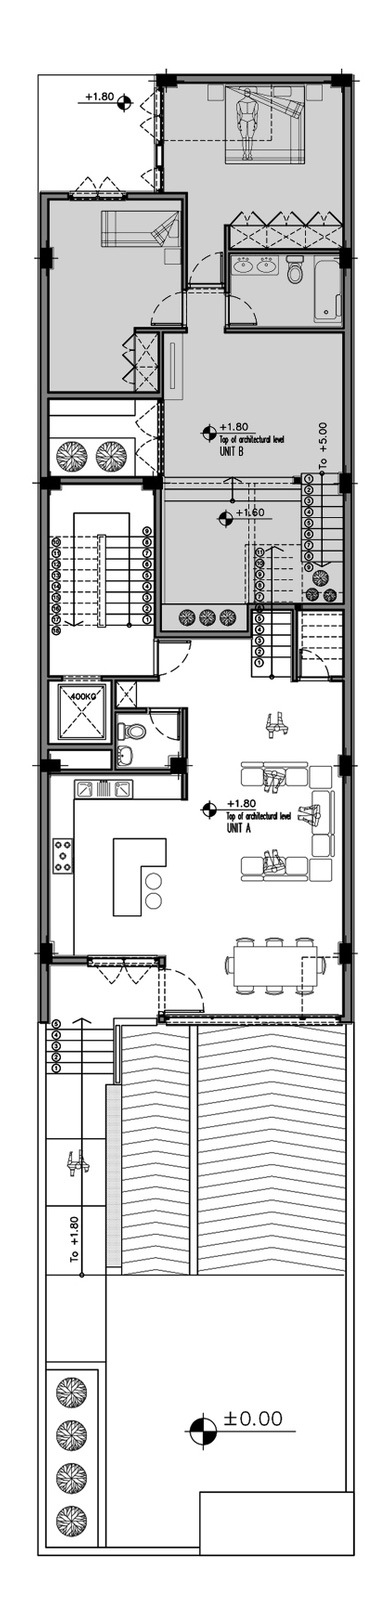 Ground  Floor Plan of Juan Apartment